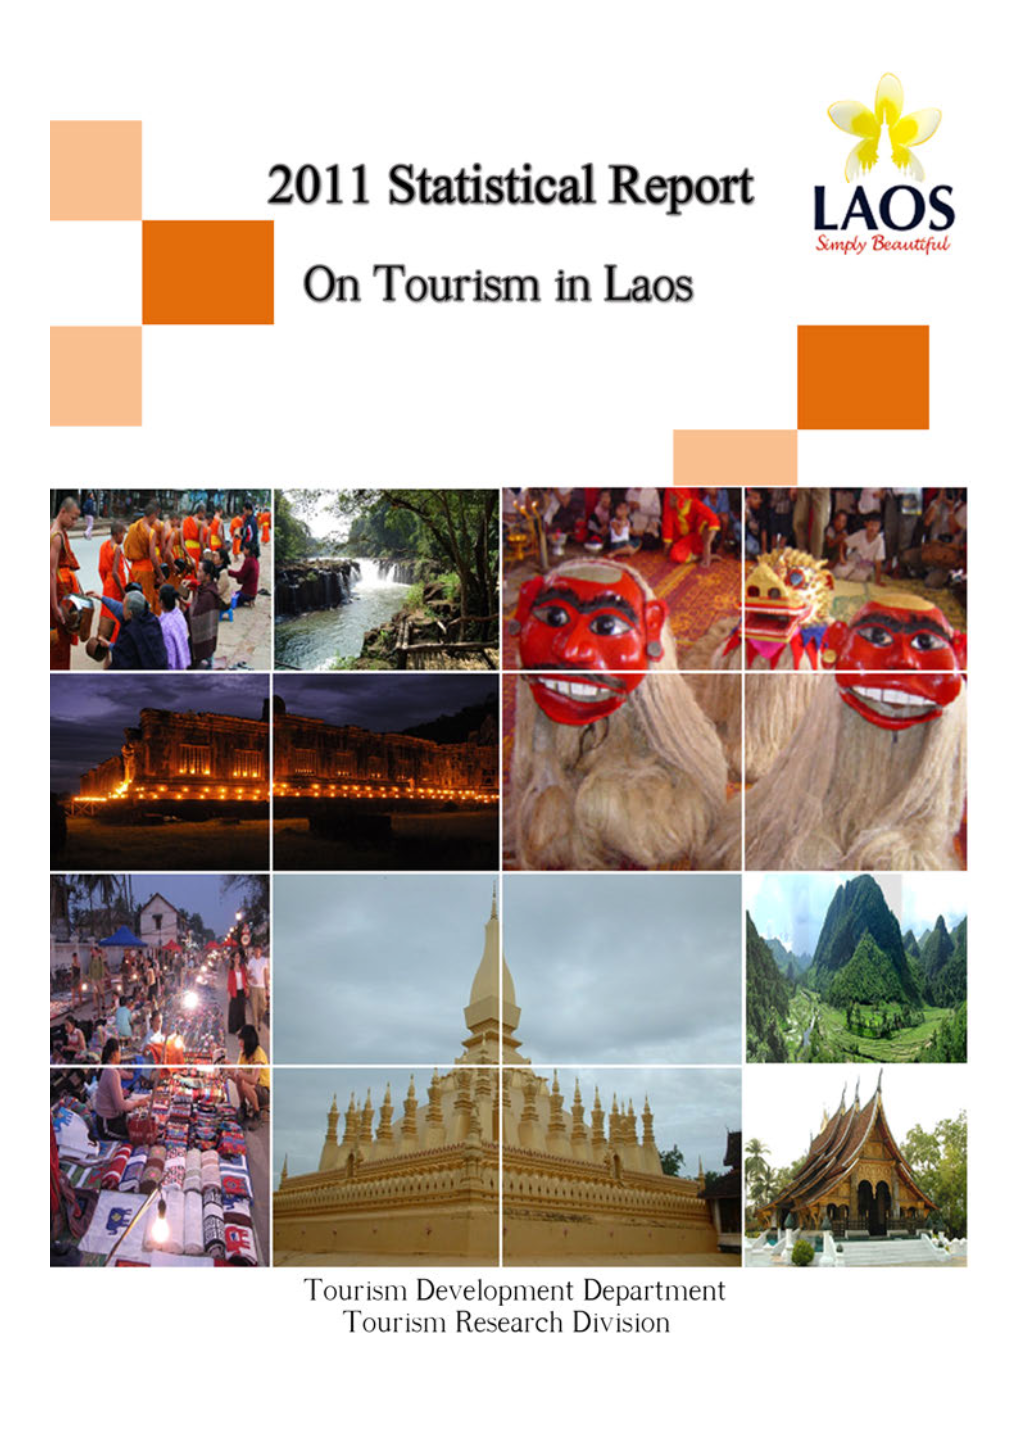 Profile of International Tourist Arrivals to Laos, 2007-2011